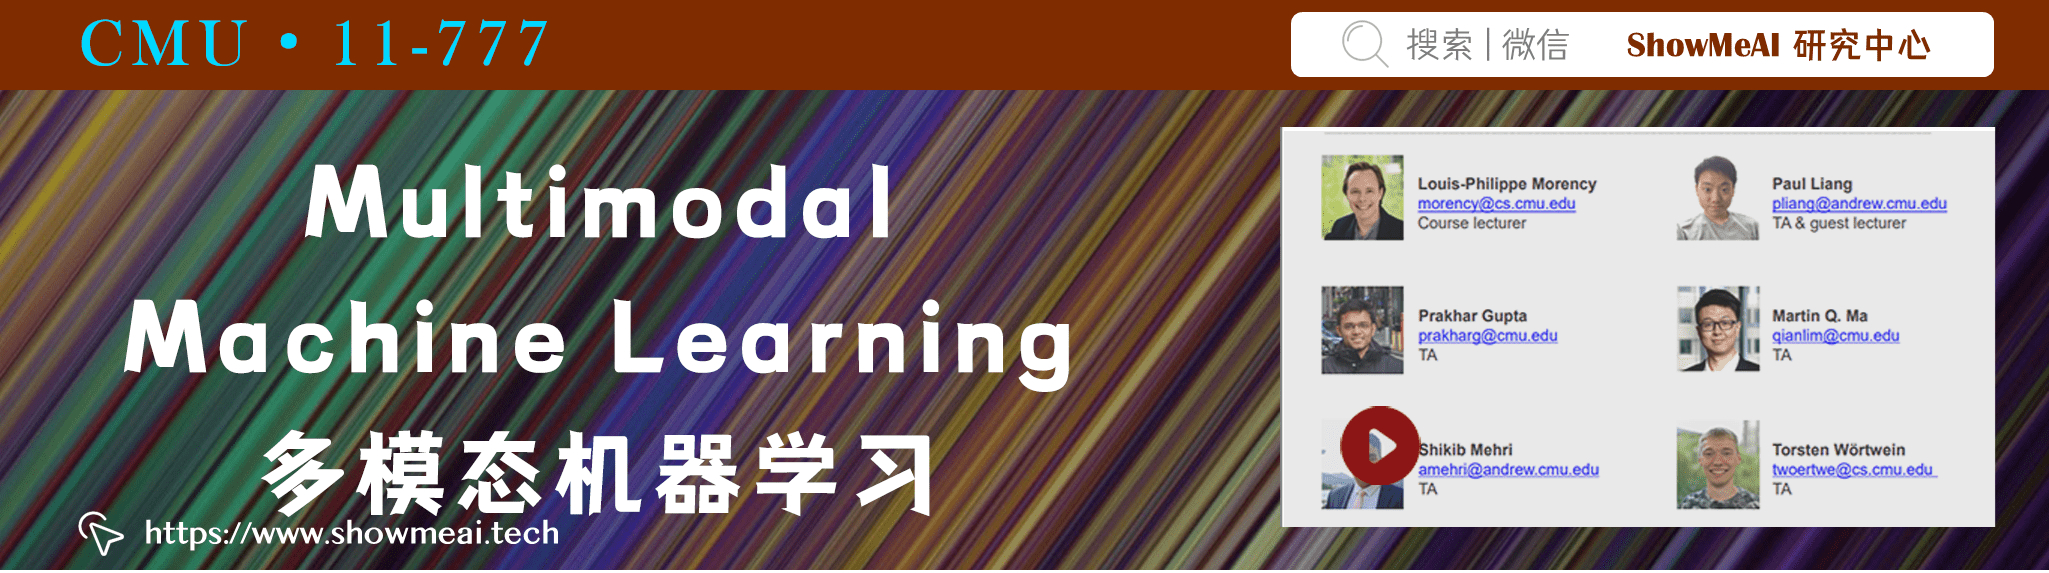 11-777; Multimodal Machine Learning; 多模态机器学习